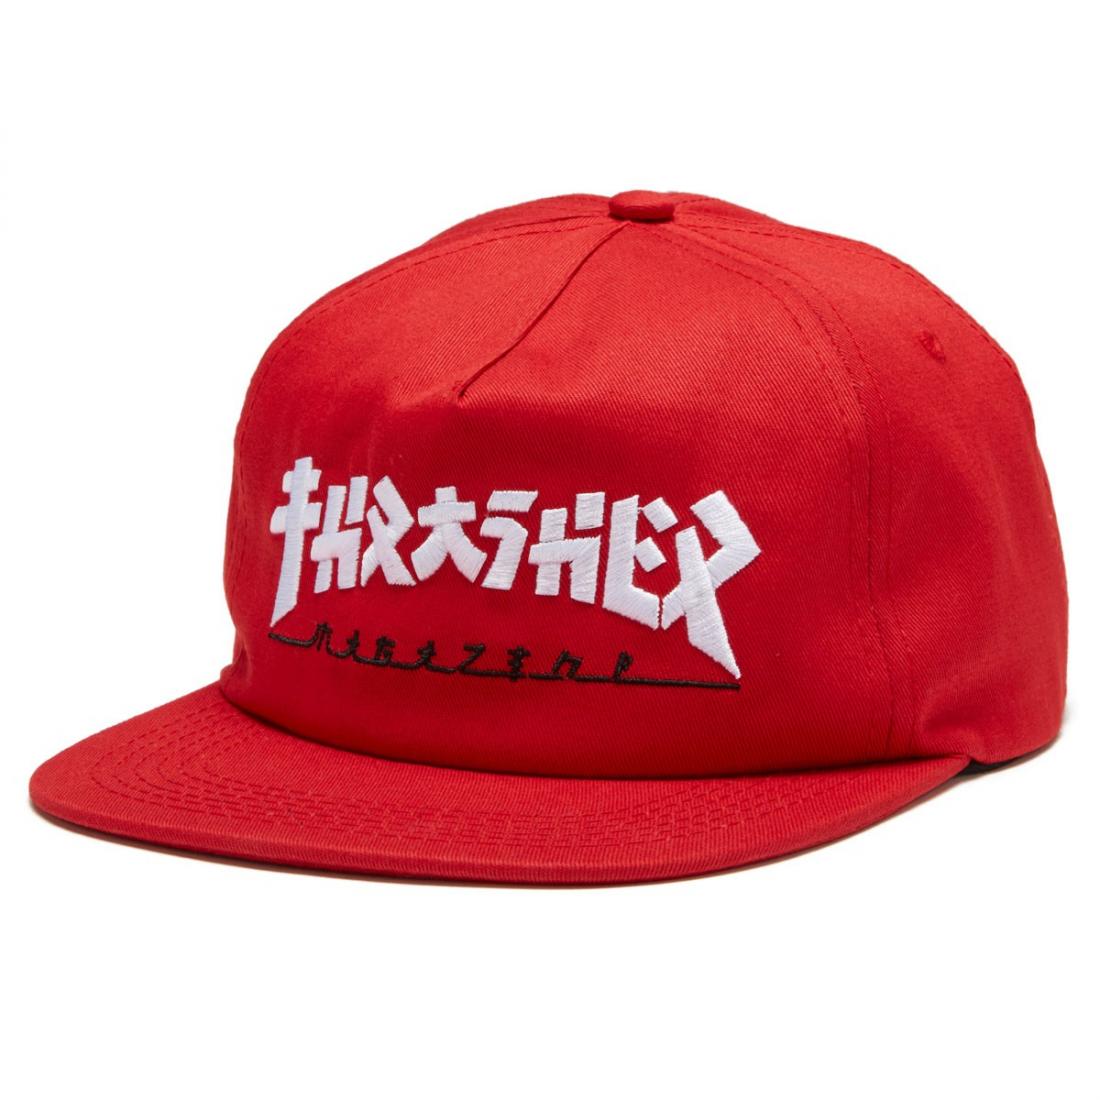 Бейсболка Thrasher Godzilla Snapback THRASHER, цвет красный, размер One Size - фото 1